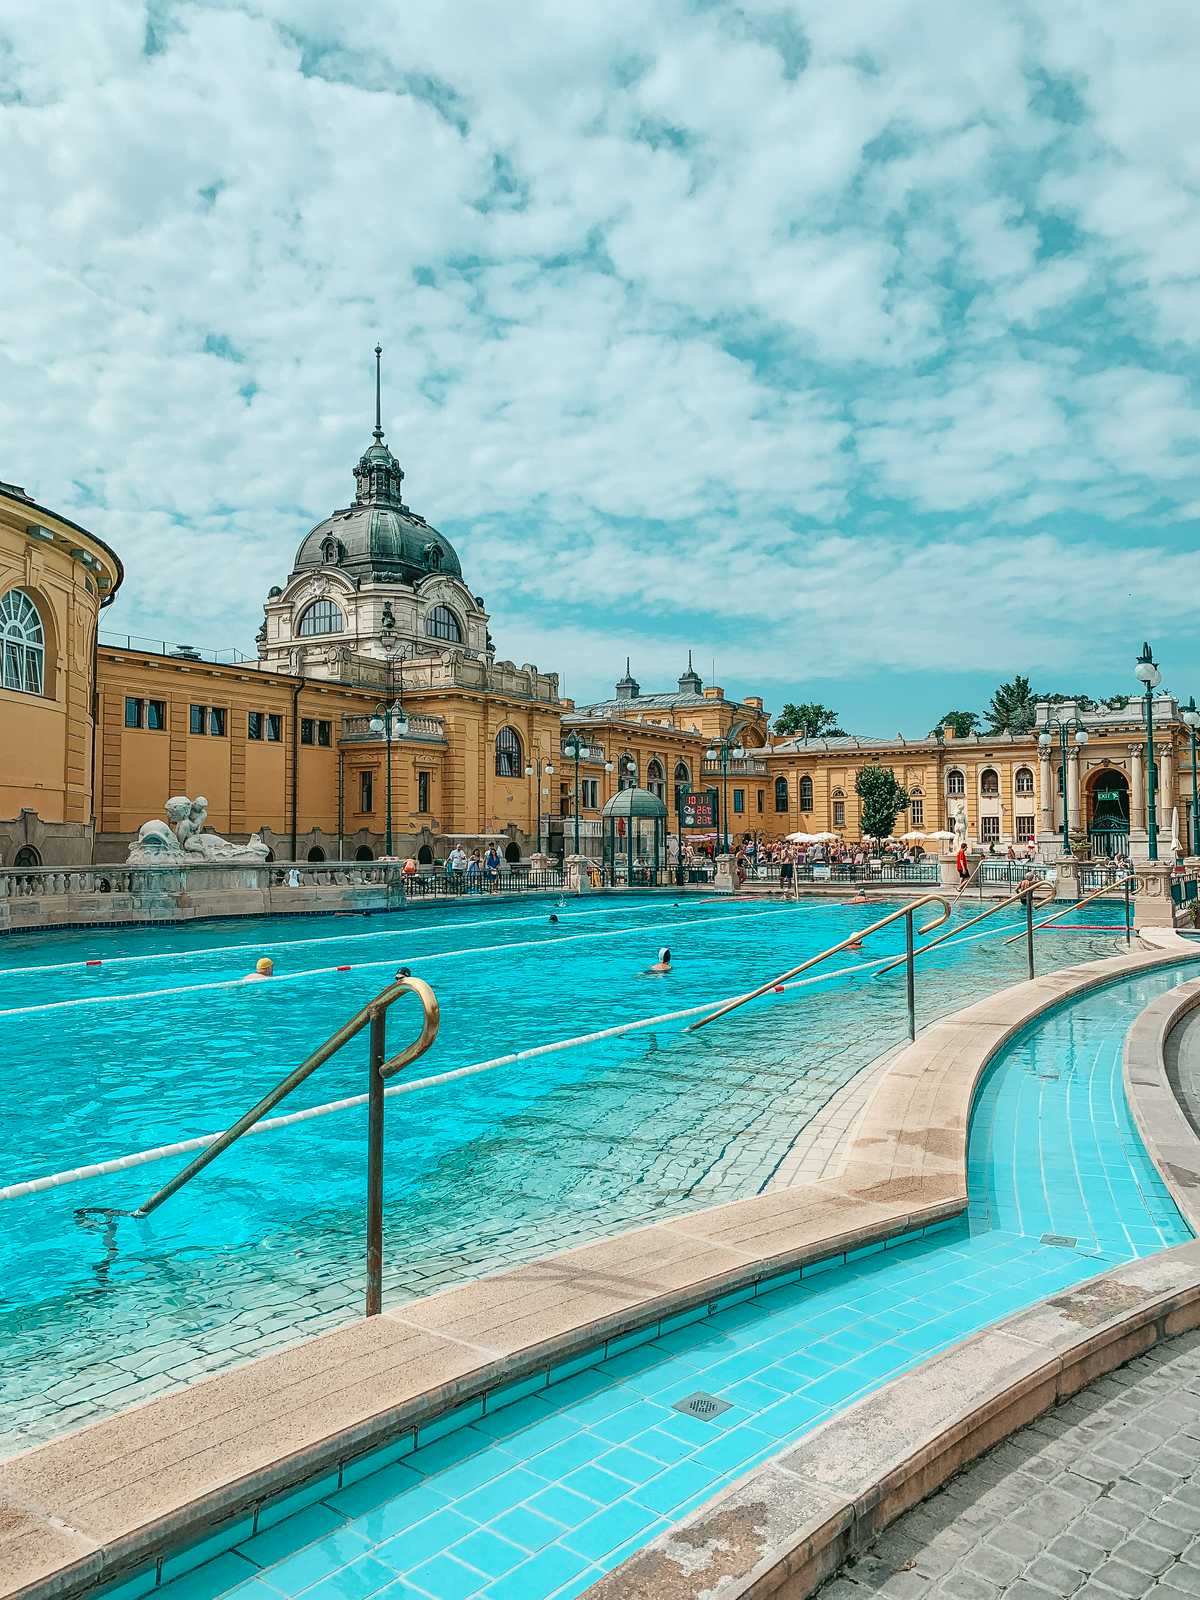 Széchenyi Thermal Bath in Budapest Hungary